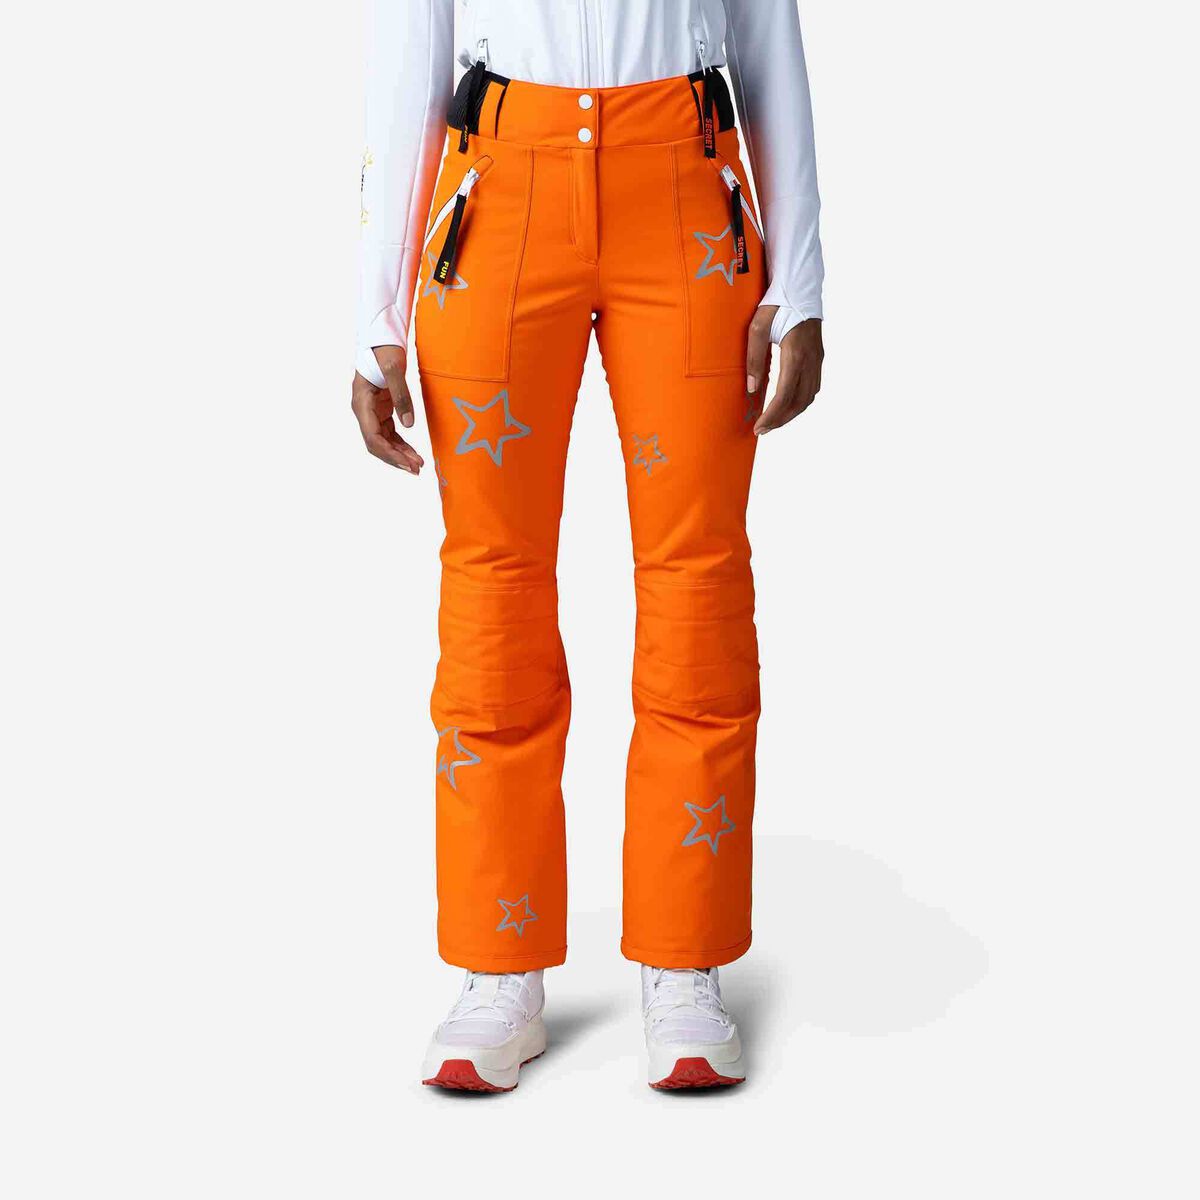 Pantalon de ski JCC Stellar femme